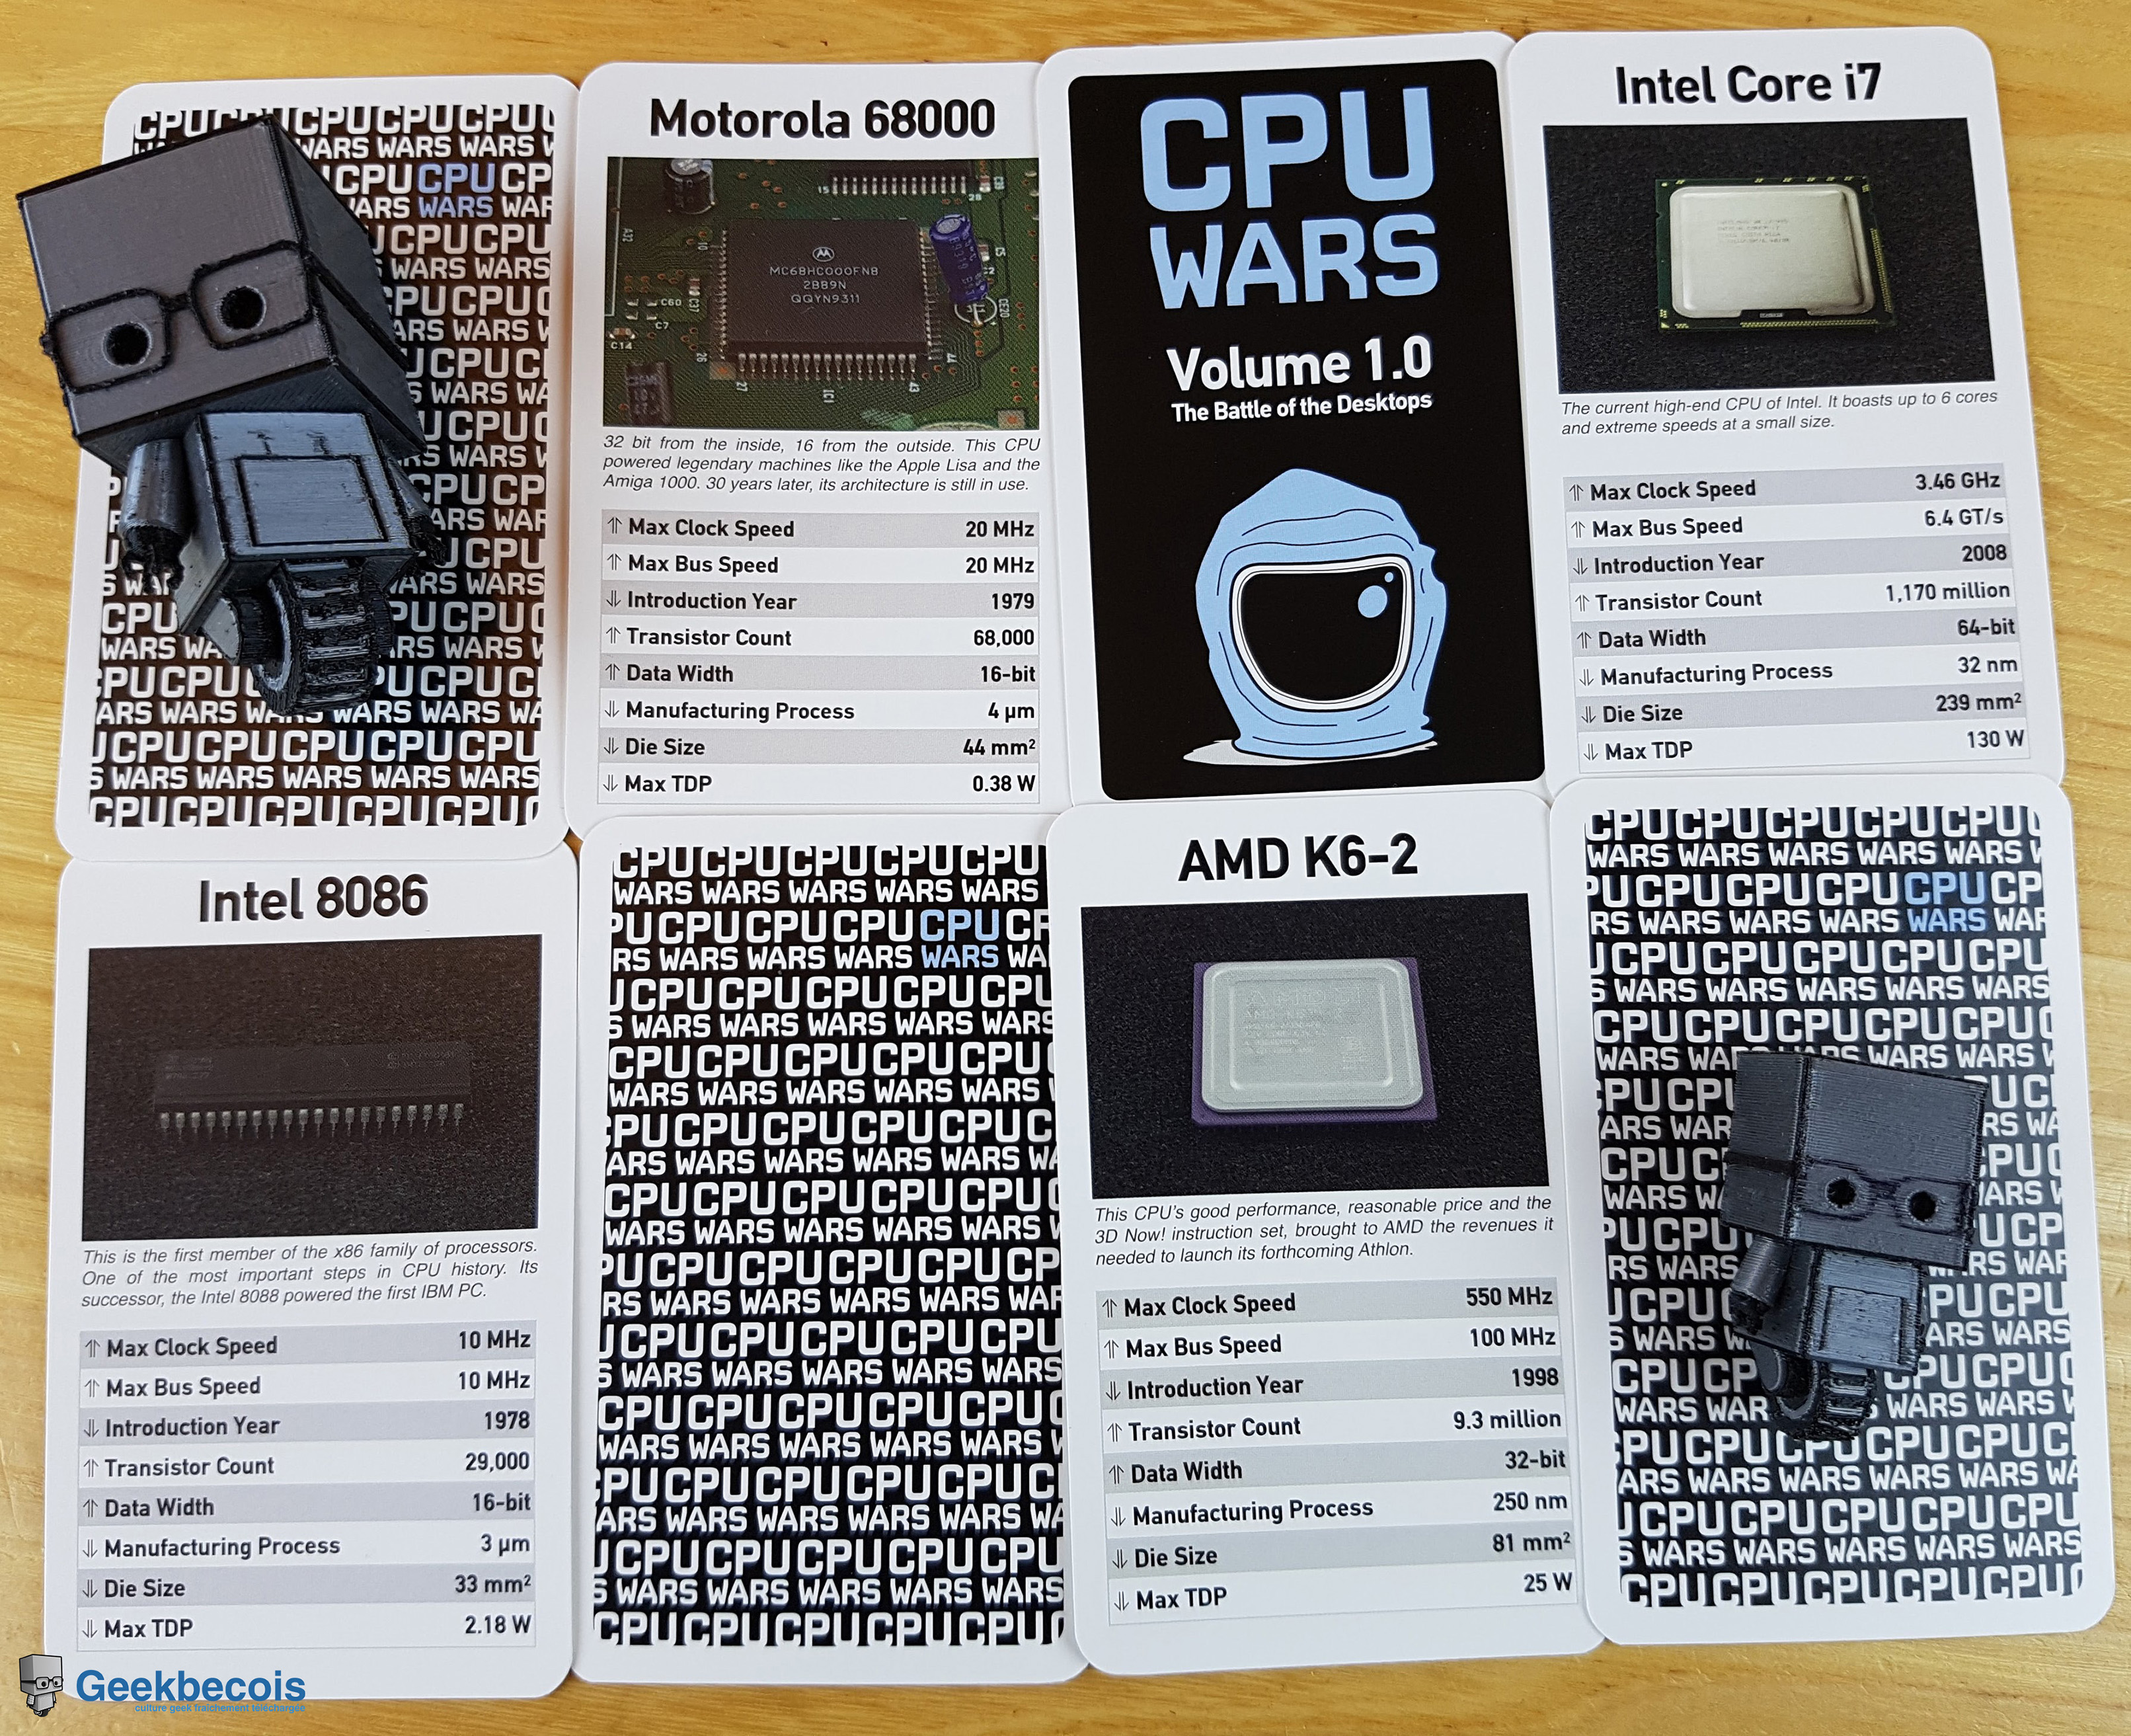 CPU WARS Volume 1.0 Battle of the Desktops